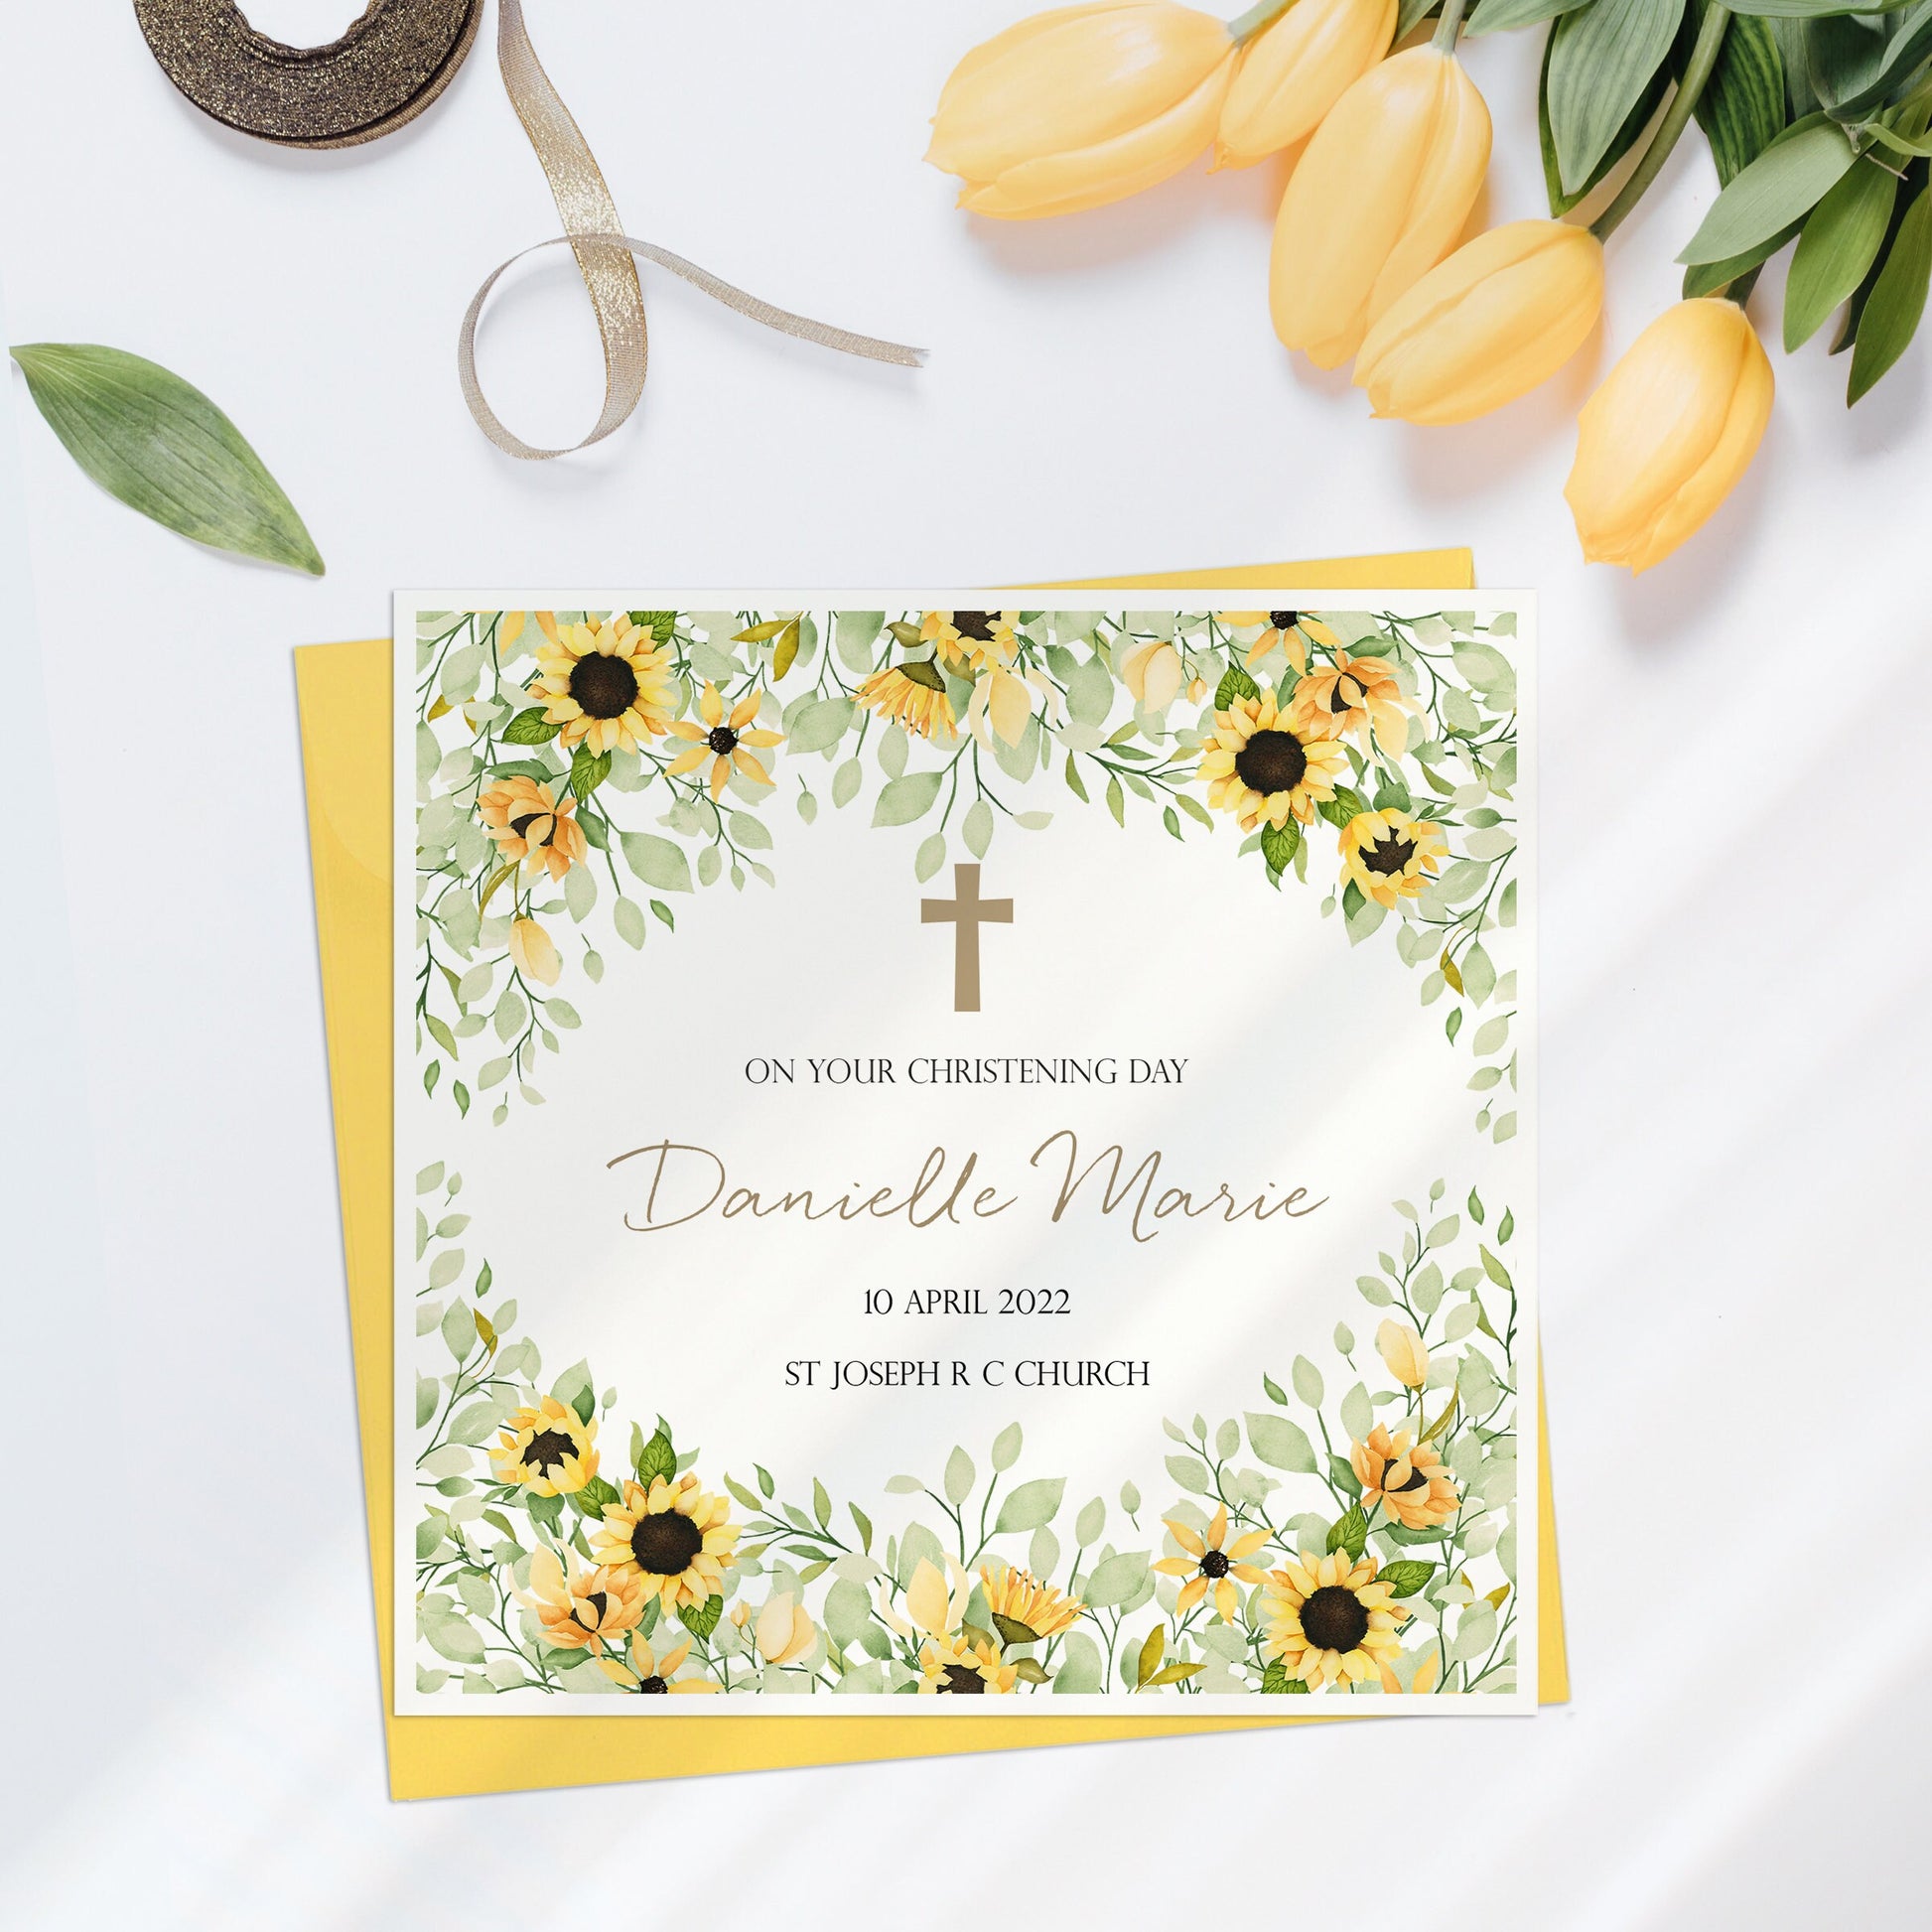 Personalised Sunflowers Christening Card, Niece Christening Card, Daughter Christening, Granddaughter Christening, Religious Celebration